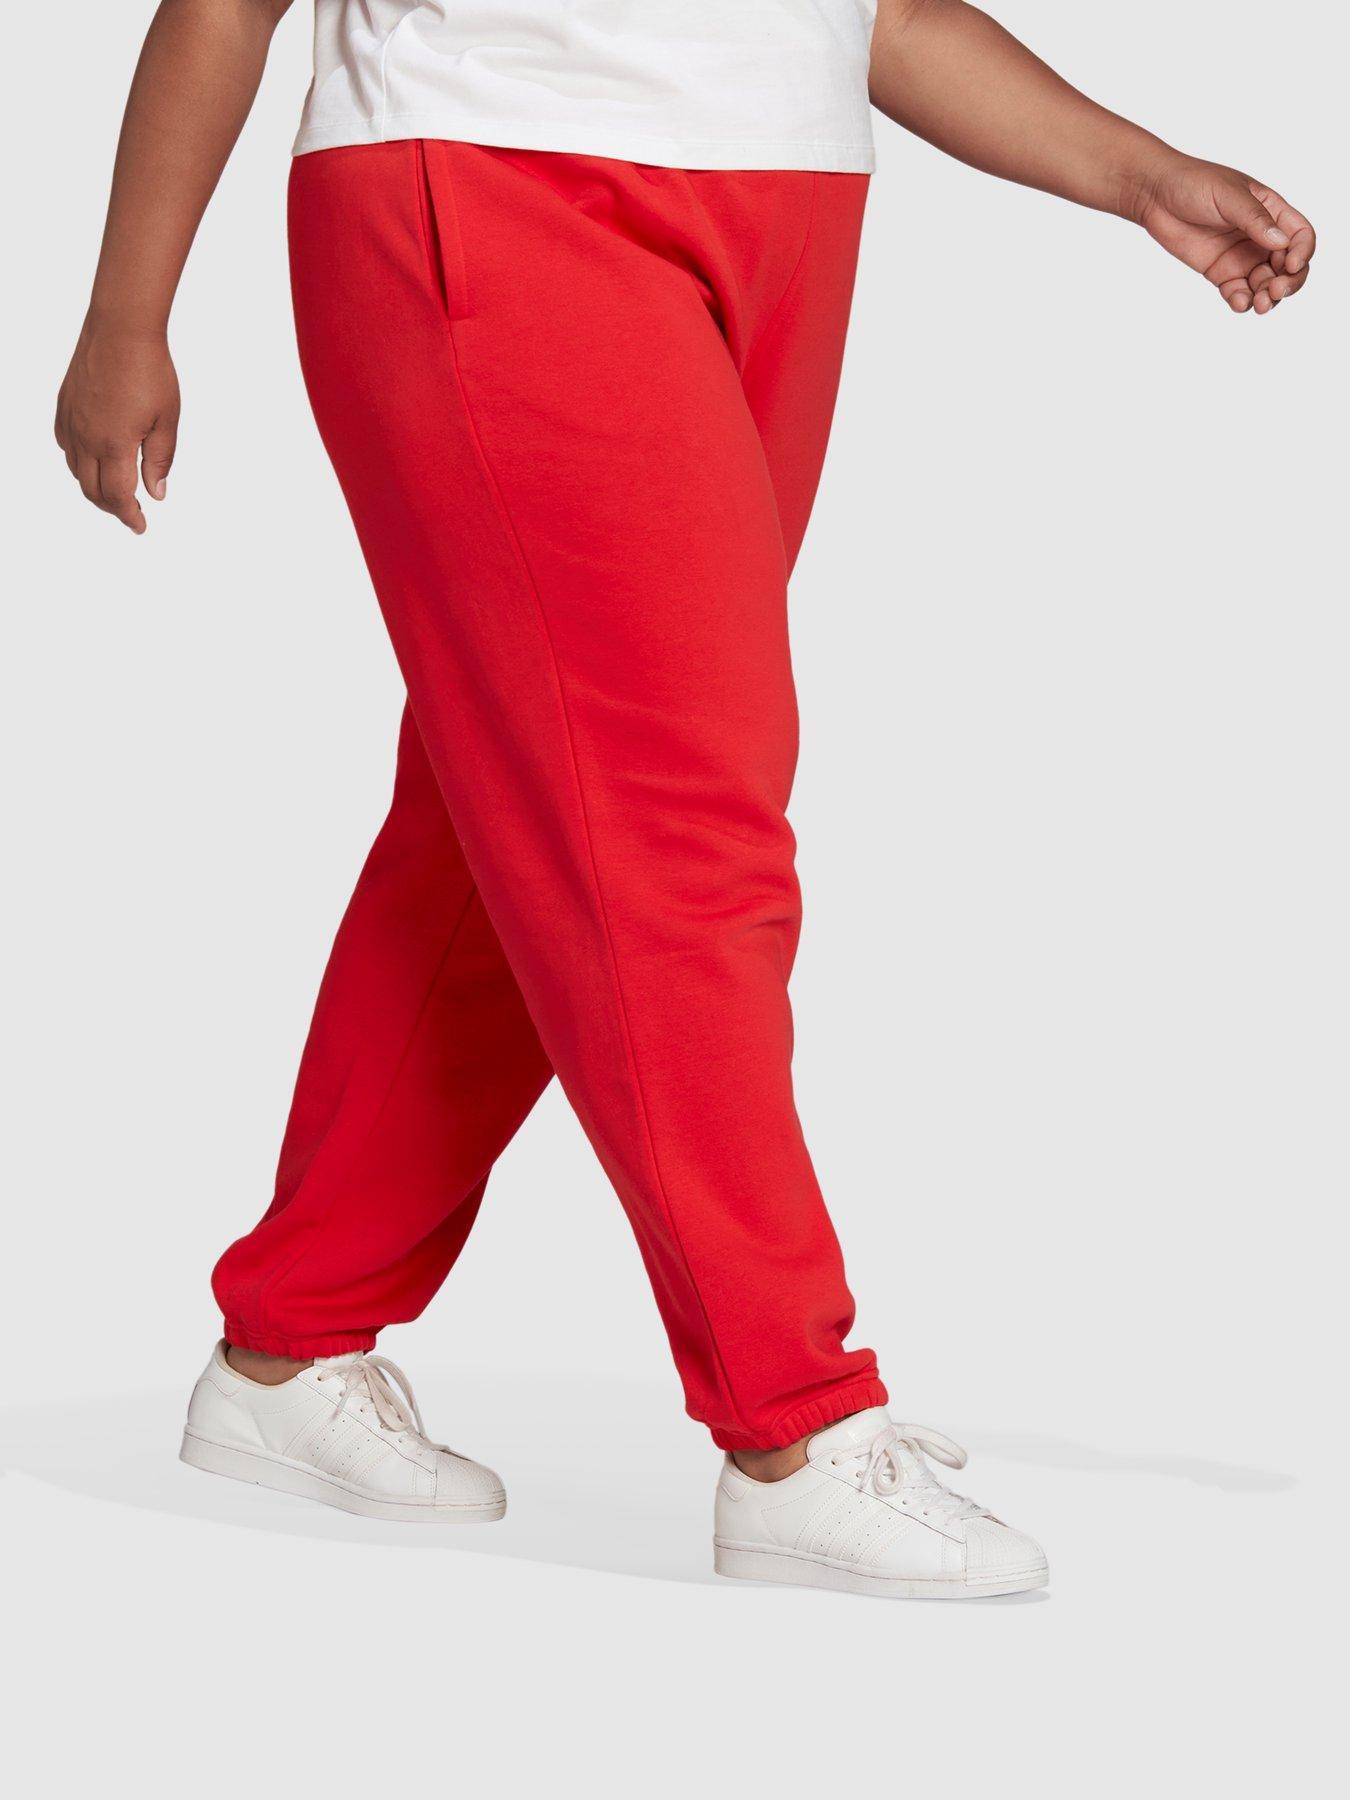 Trousers & Leggings Pants (Plus Size) - Red